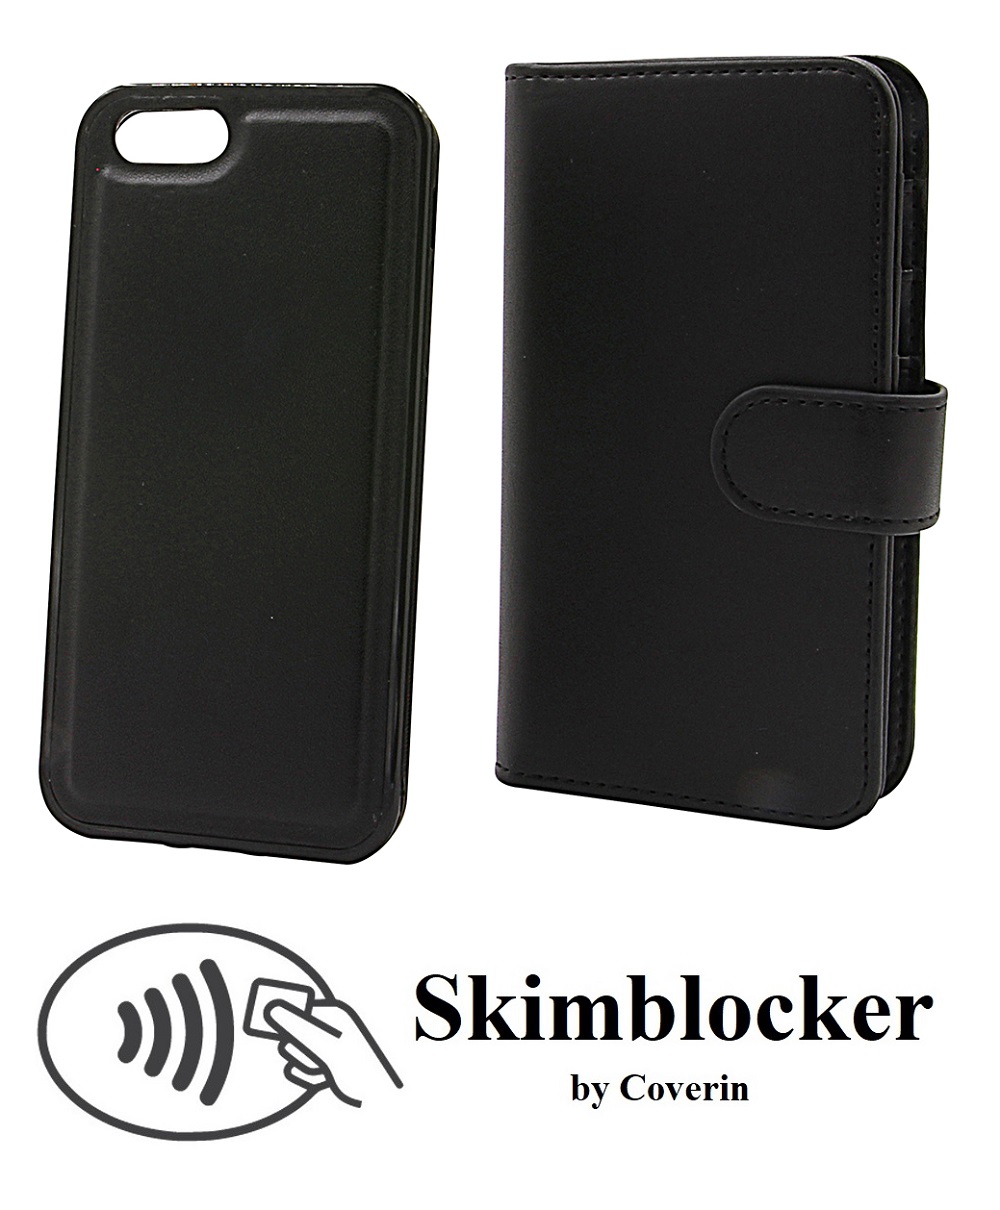 CoverIn Skimblocker XL Magnet Wallet iPhone 5/5s/SE